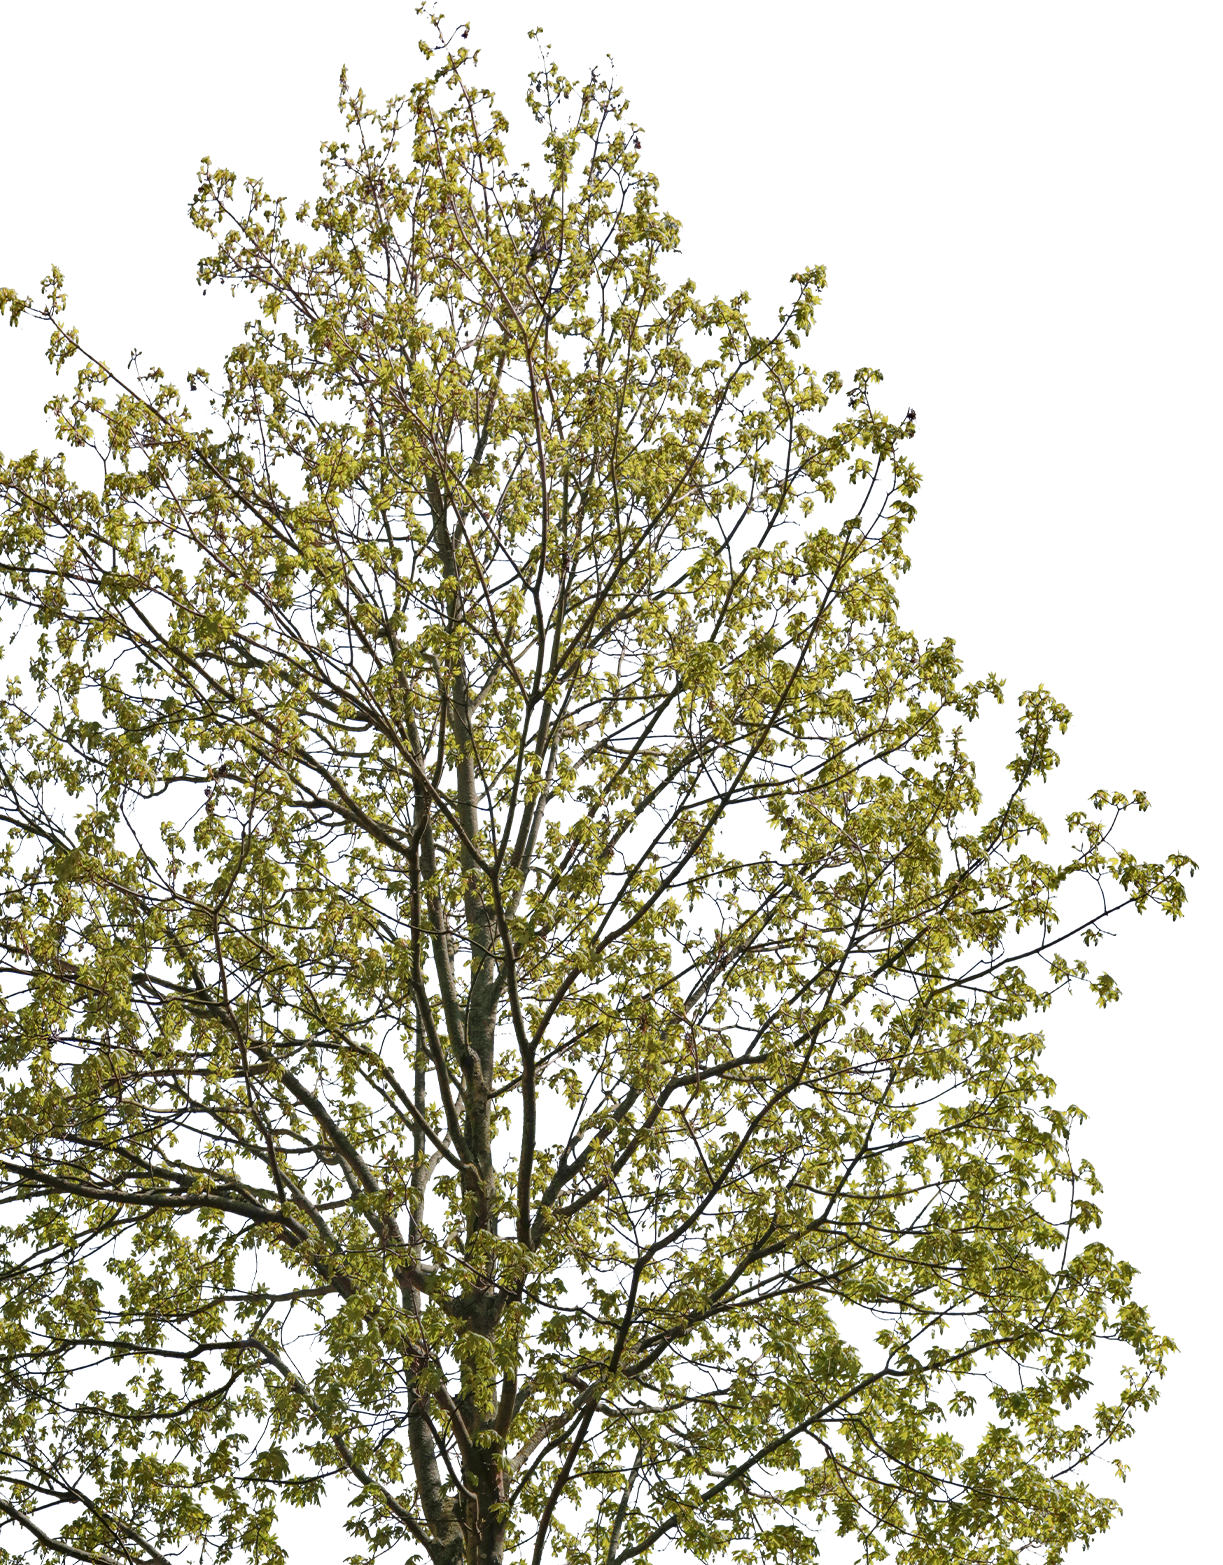 acer platanoides m02 - cutout trees